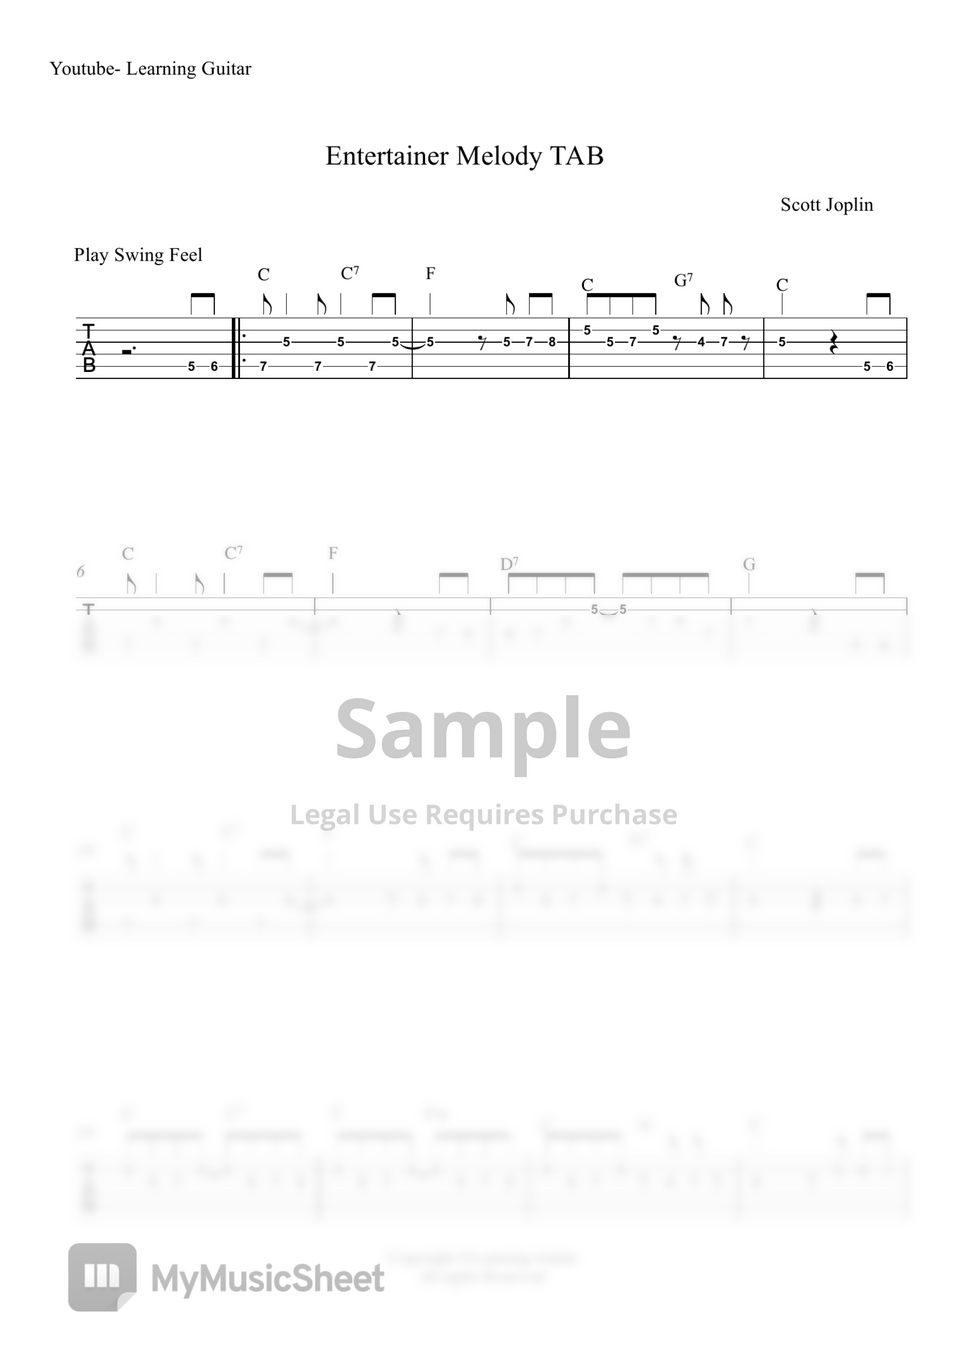 Scott Joplin - Entertainer Guitar Melody (TAB) by Learning Guitar